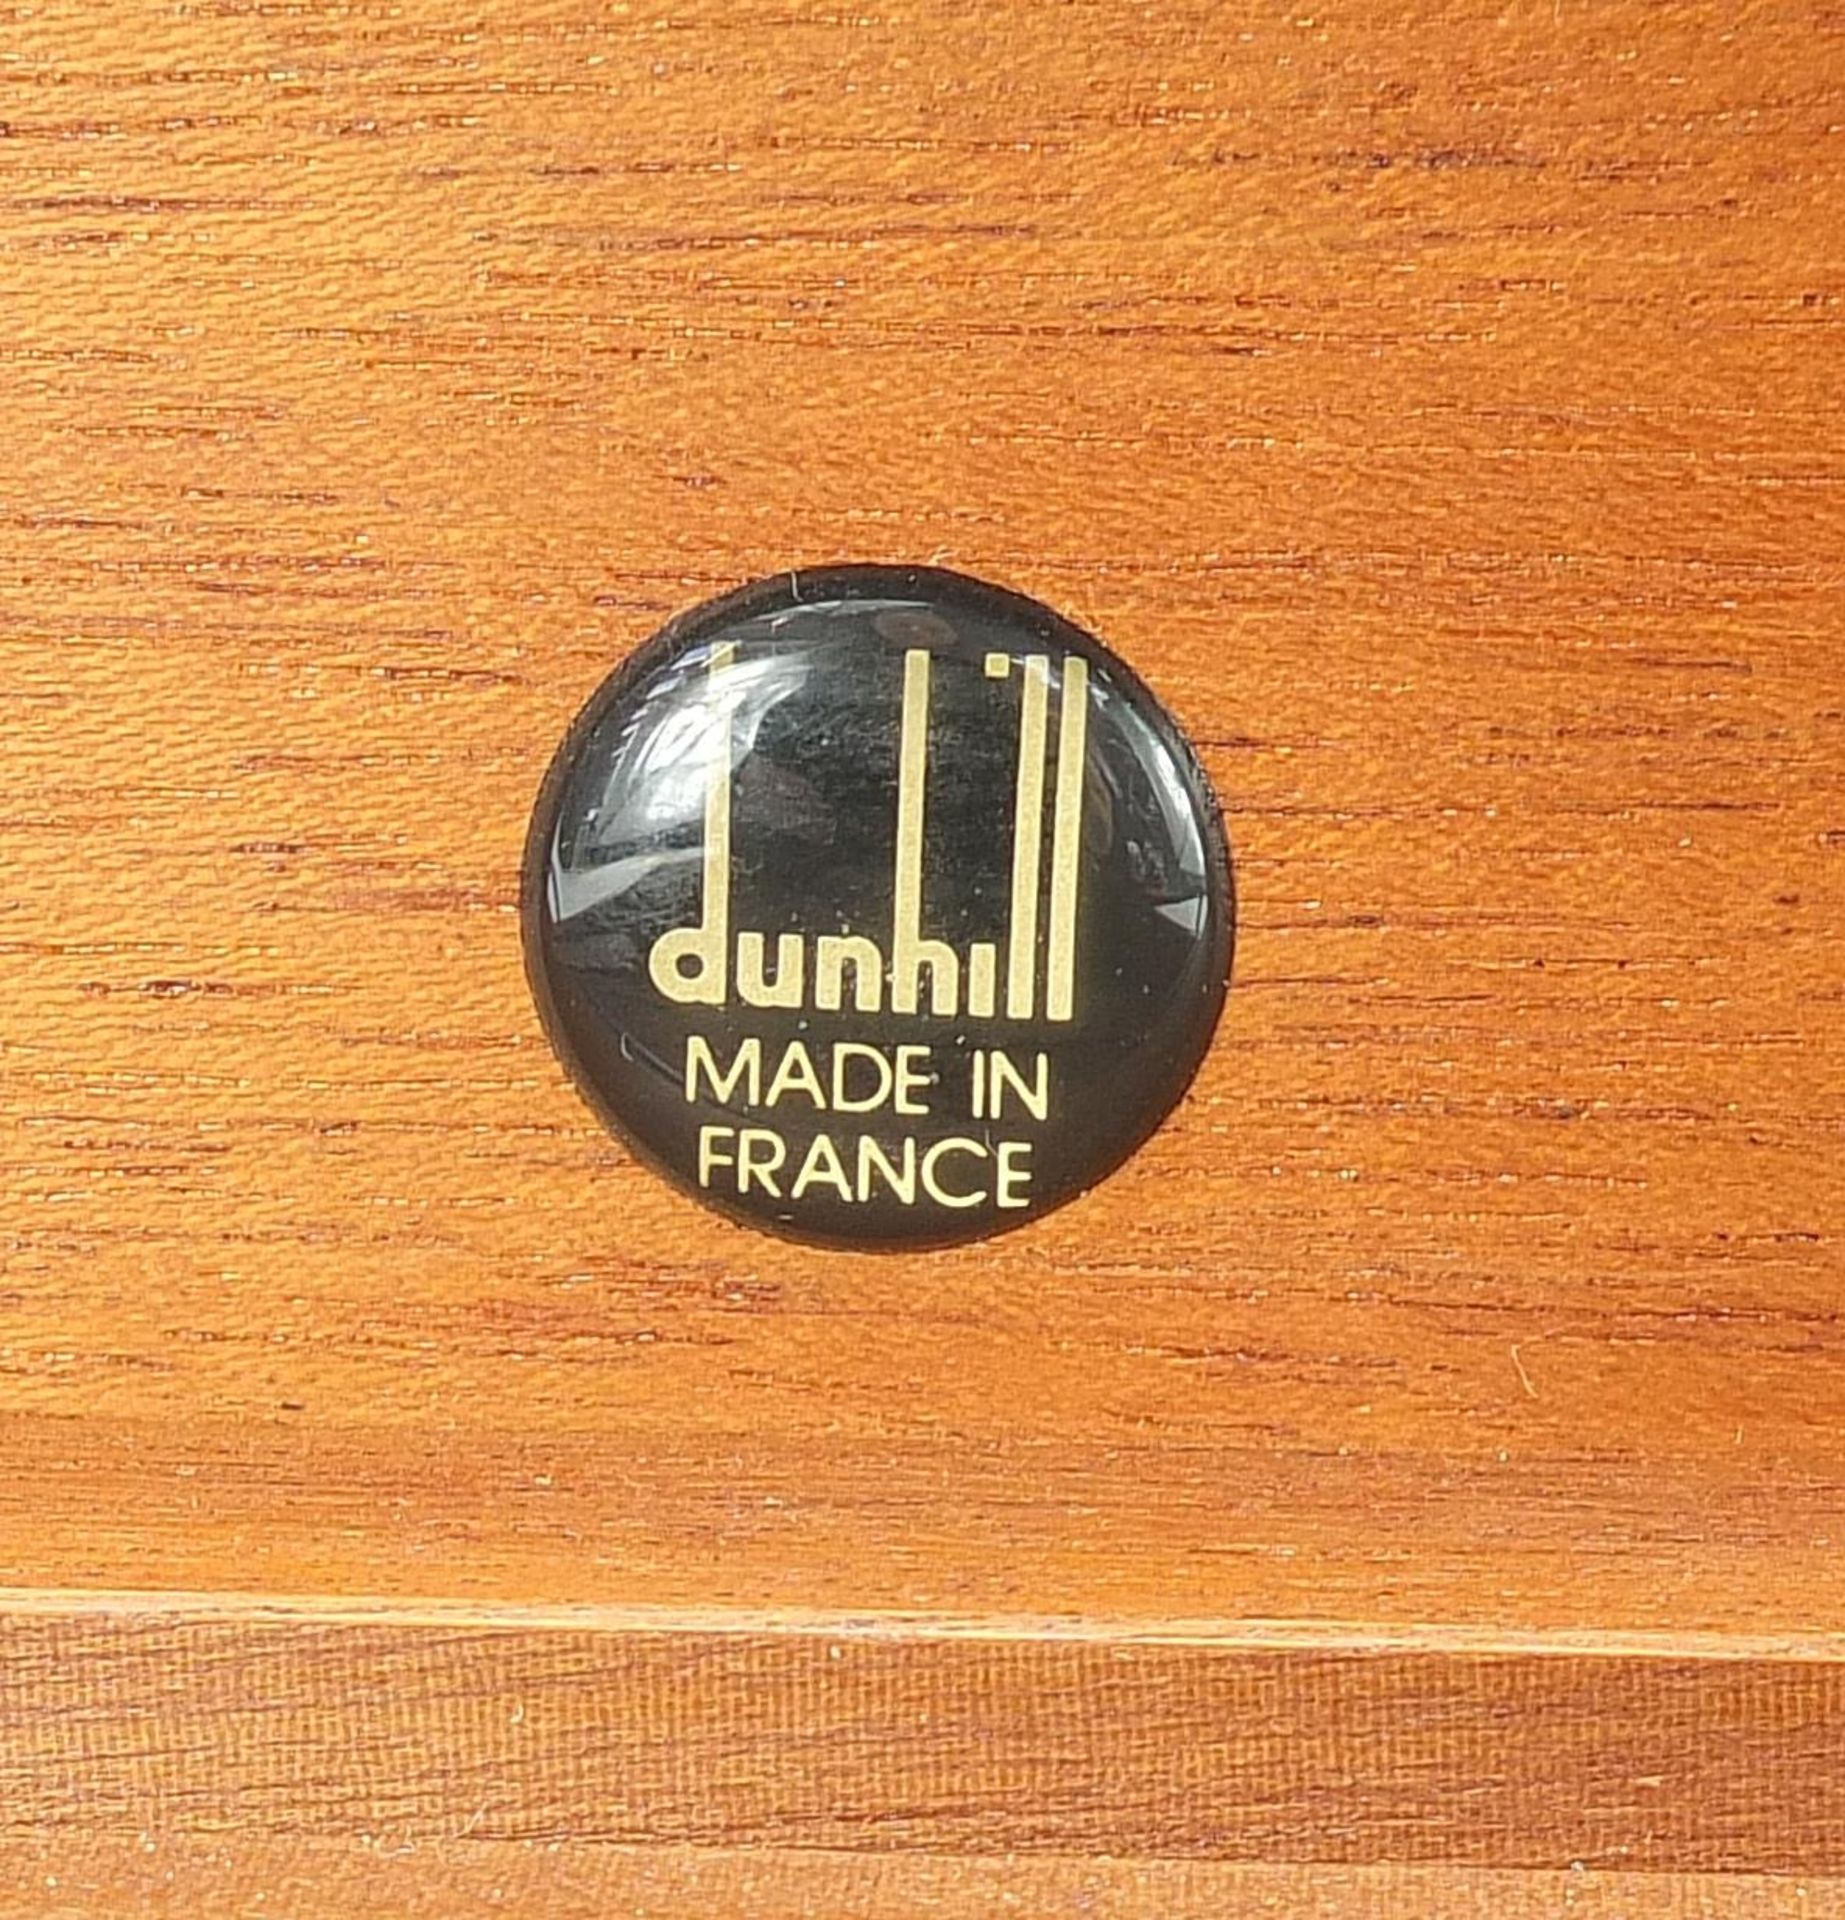 Dunhill burr walnut humidor, 8.5cm H x 25cm W x 21.5cm D - Image 3 of 4